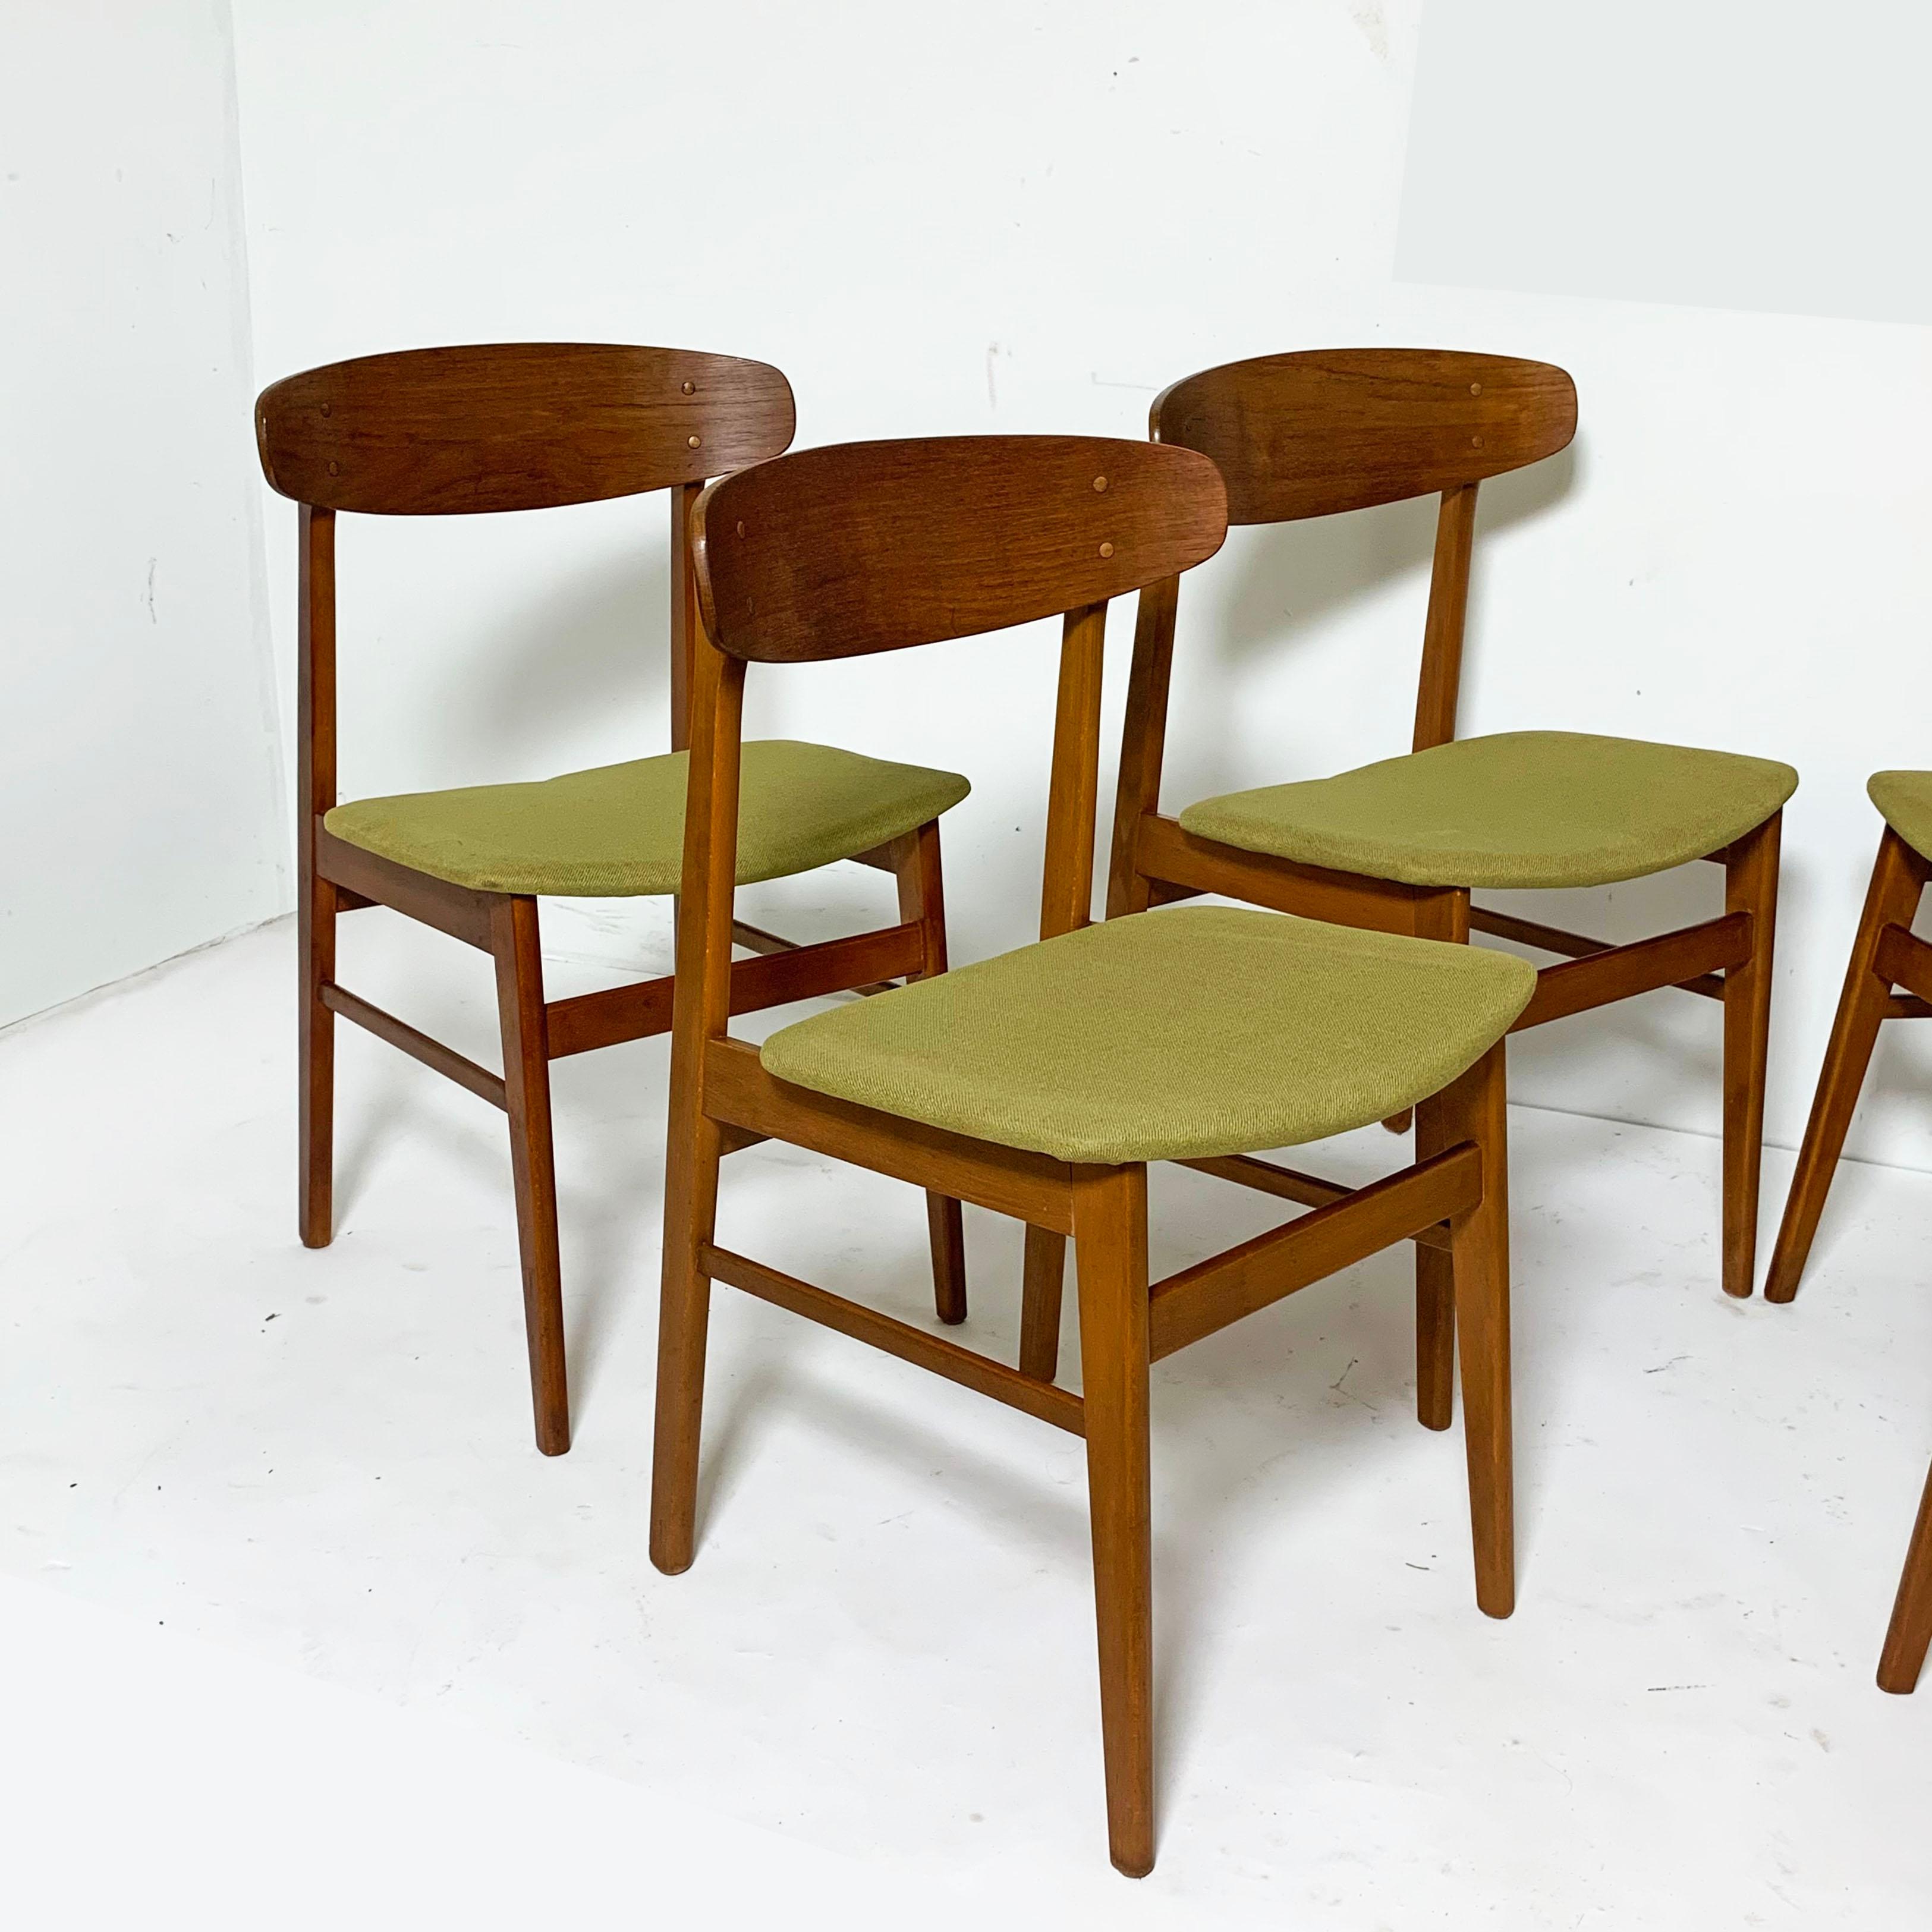 Set of six dining chairs, in teak and birch by Saxkjobing Savvaerk Stolefabrik (Sax), made in Denmark, circa 1960s.